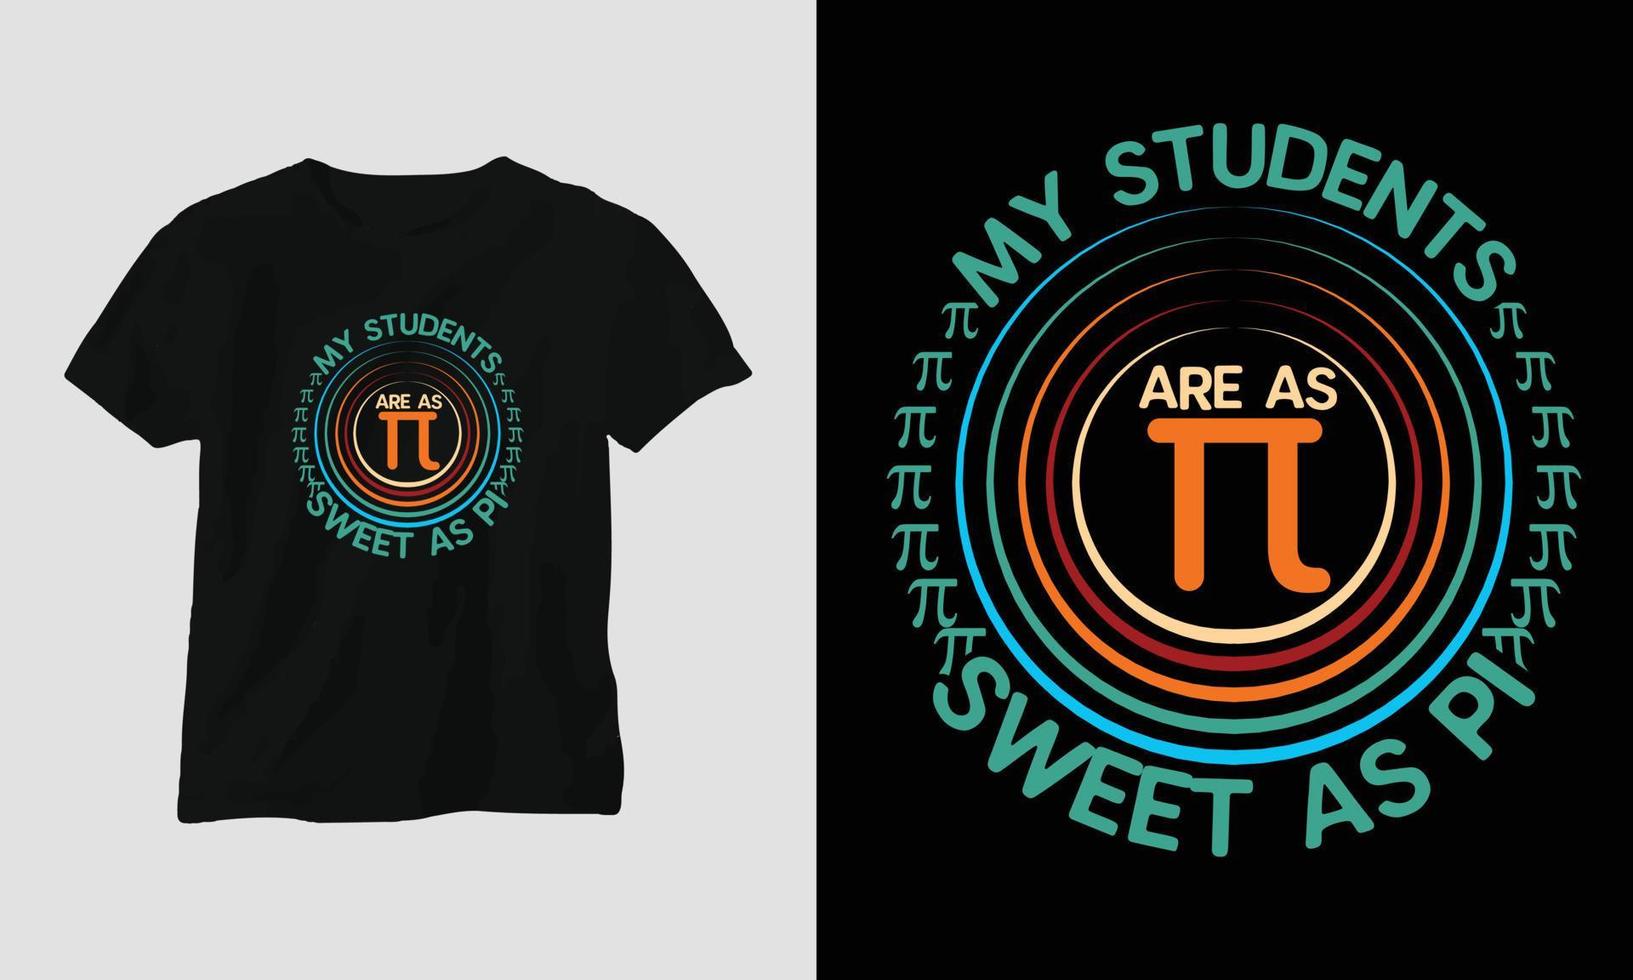 pi day spezielles typografie-t-shirt-design-vorlagendesign mit pi, mathematik usw. vektor